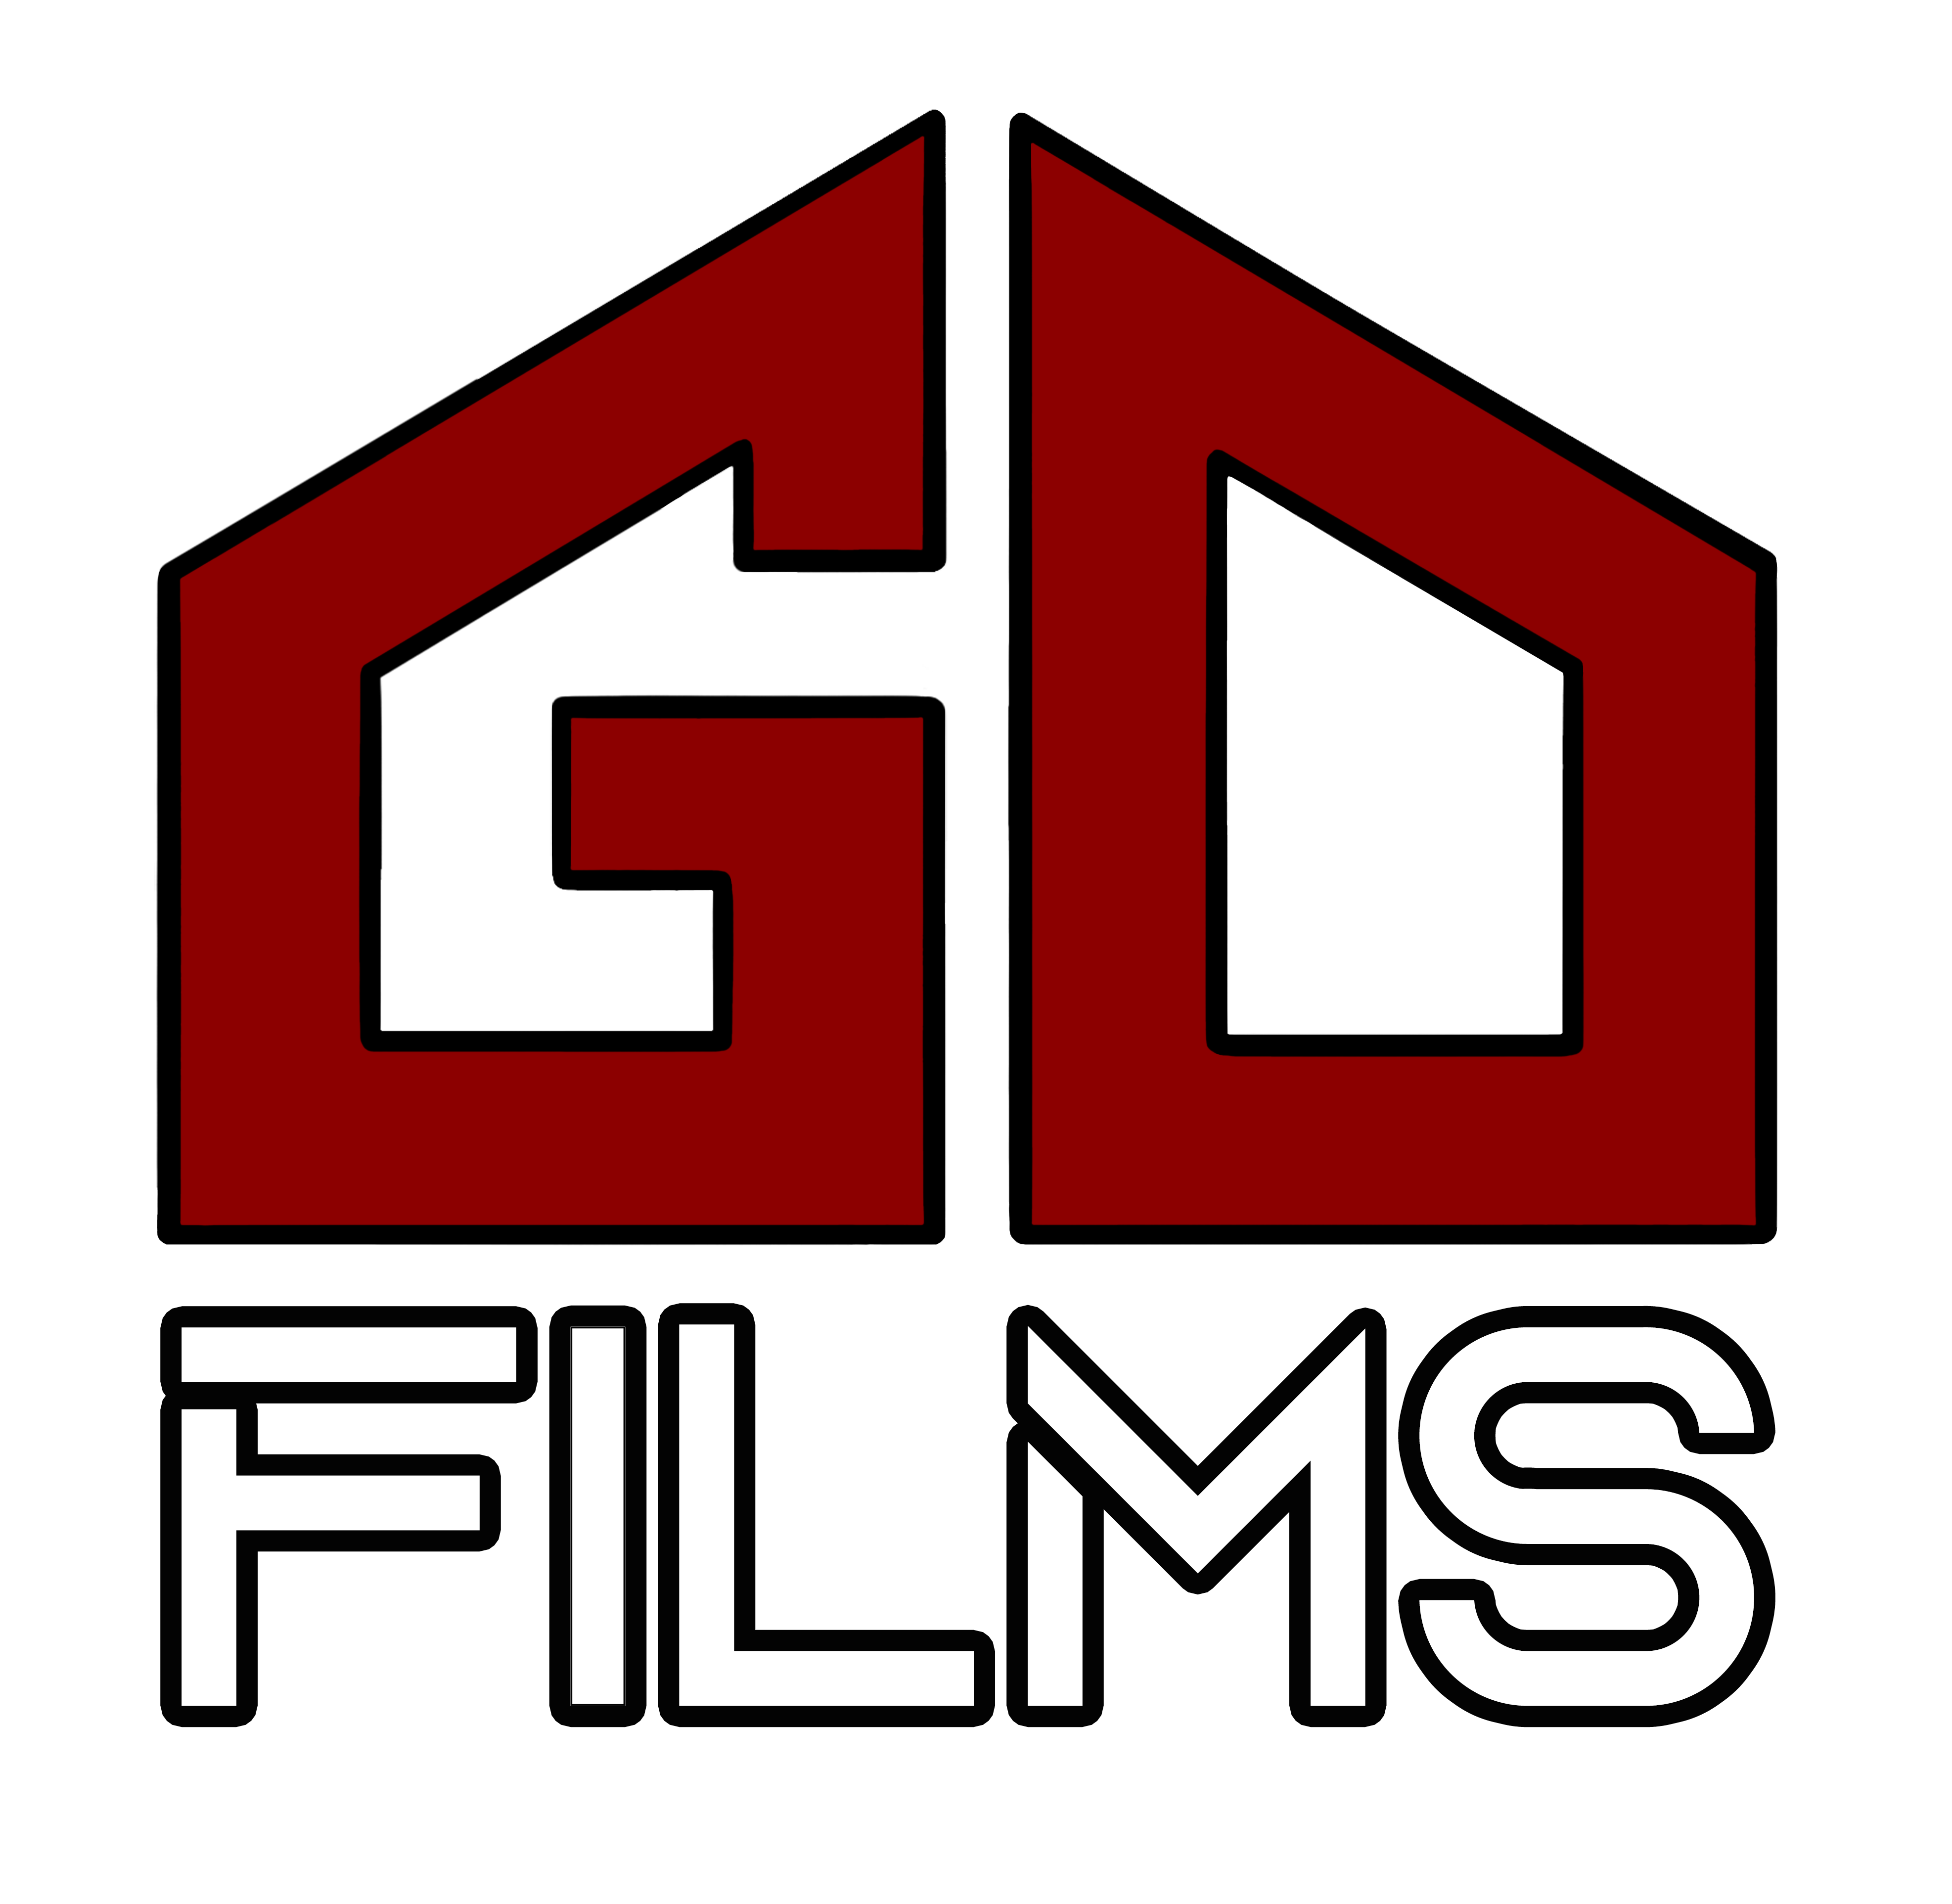 Garage Door Films GDF social media management video production